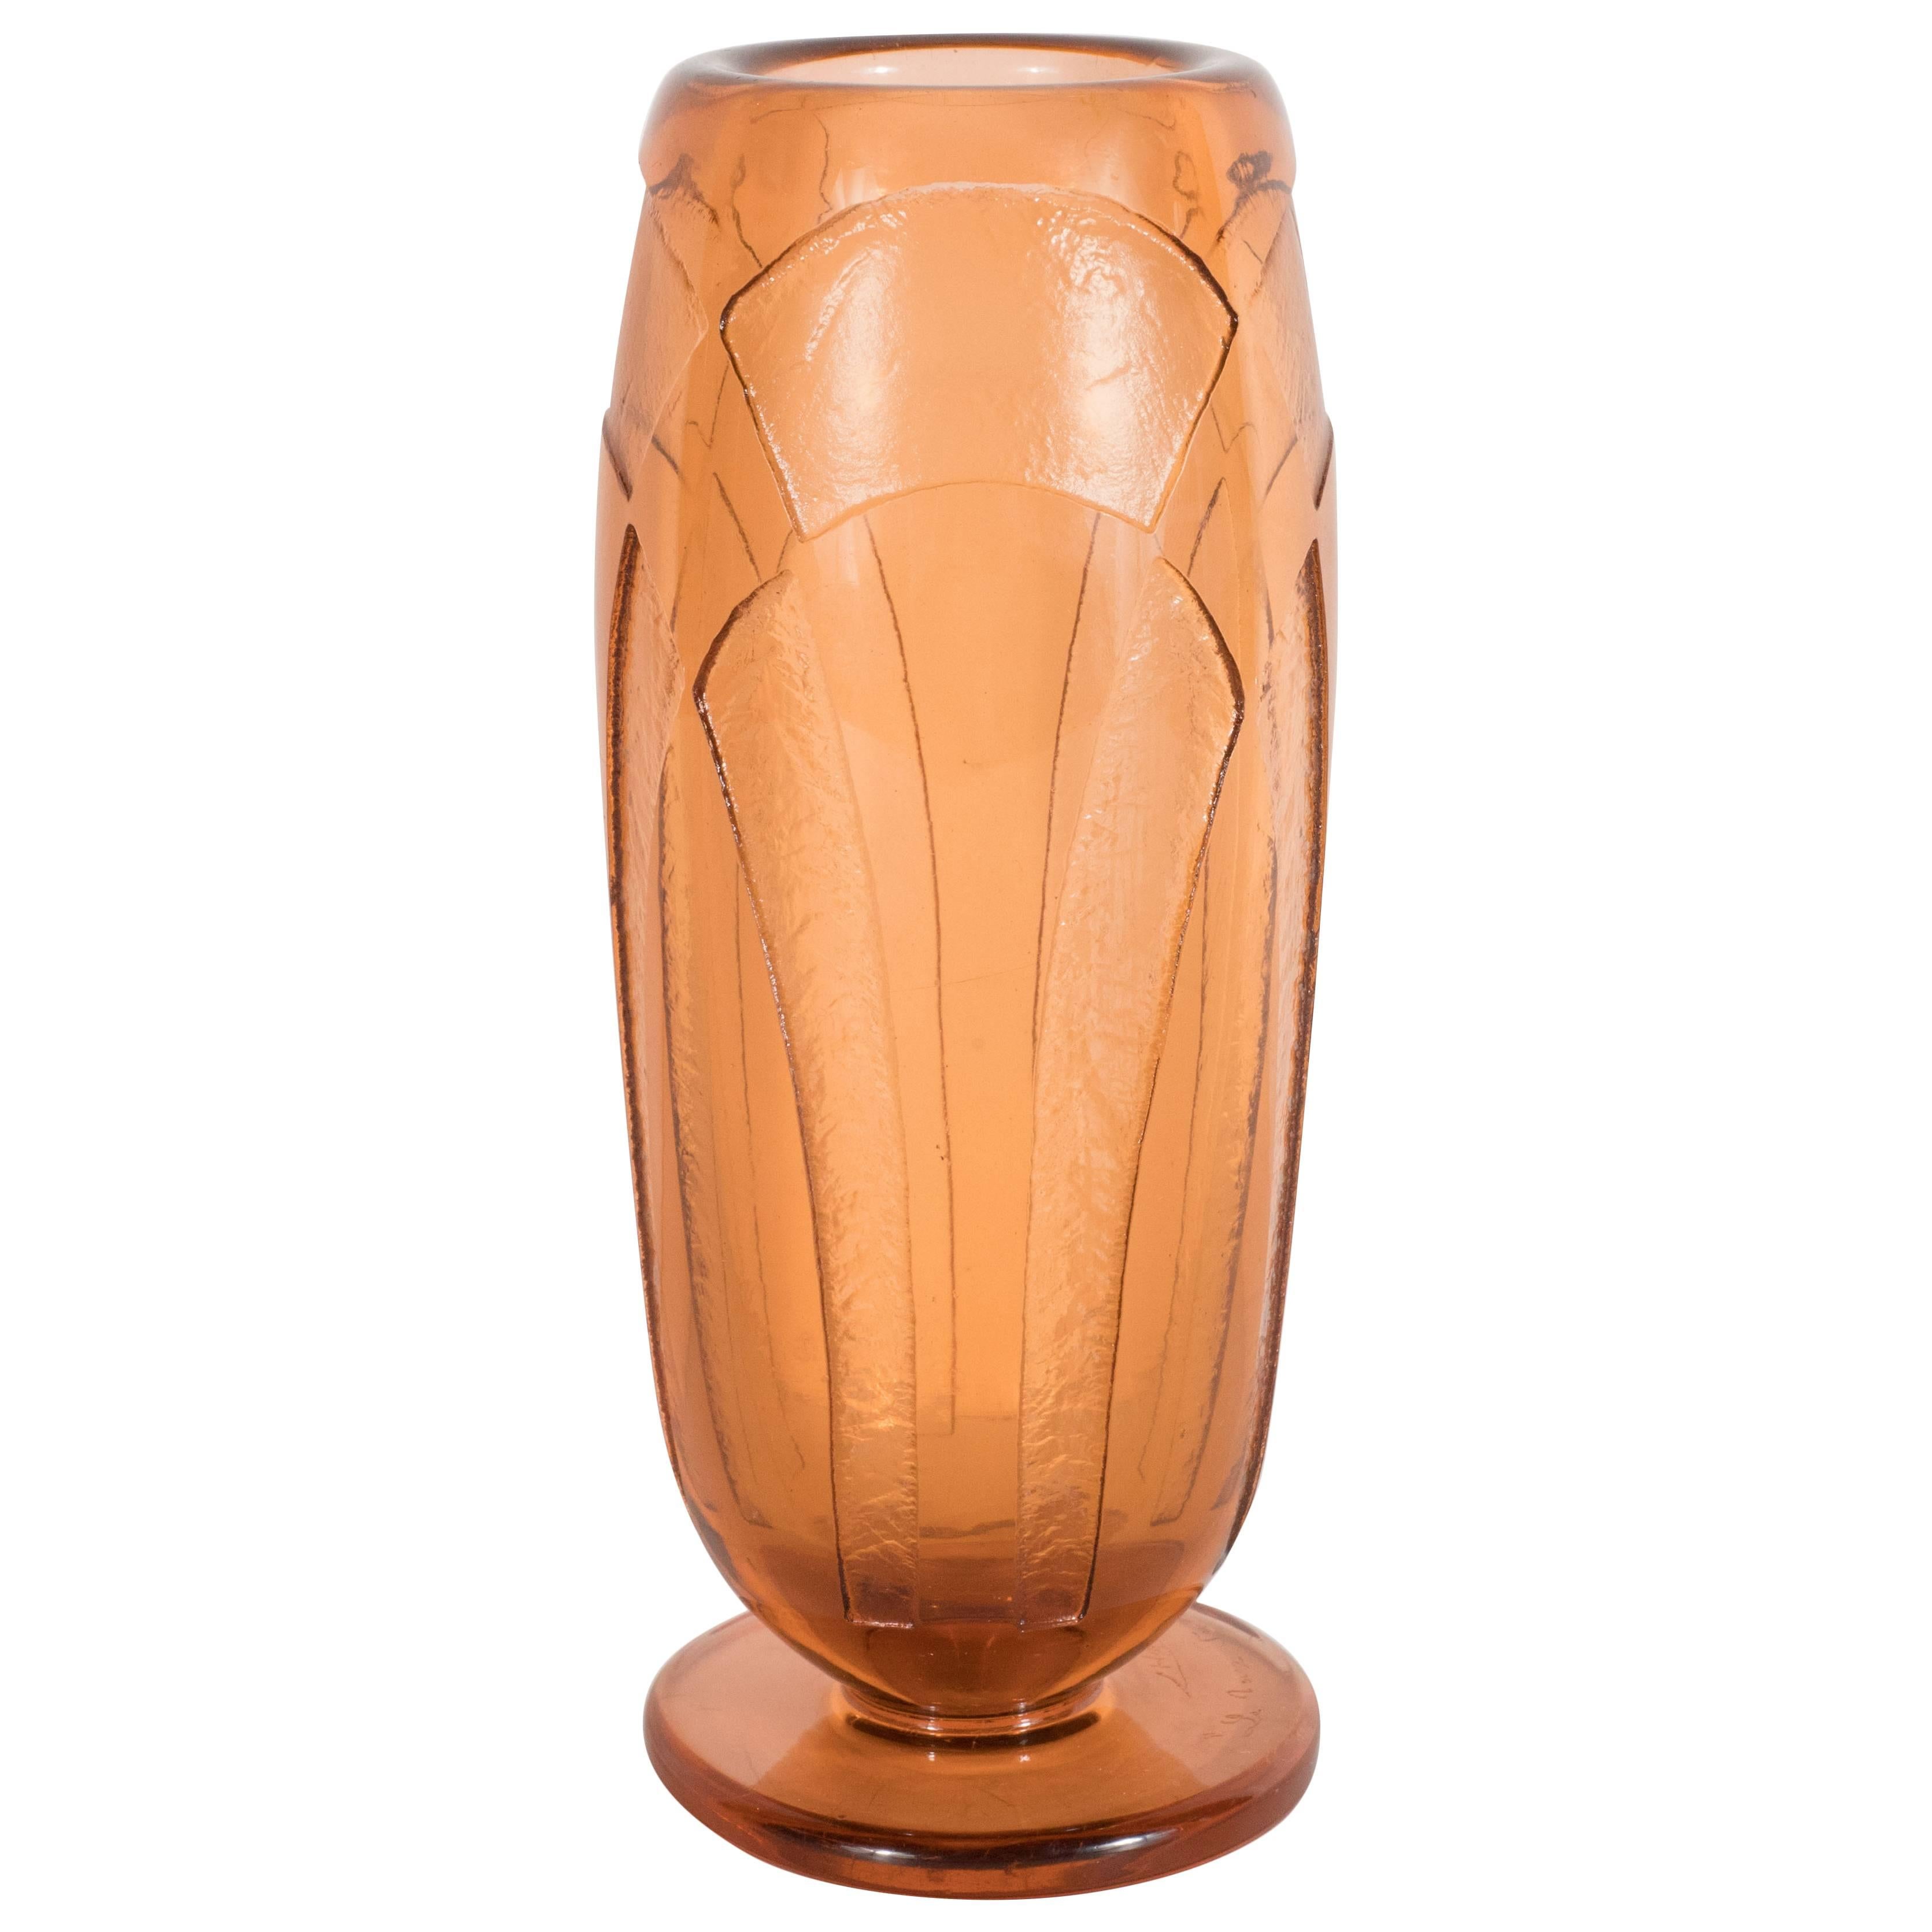 Art Deco Vase in Translucent Cognac with Cubist Geometric Patterns